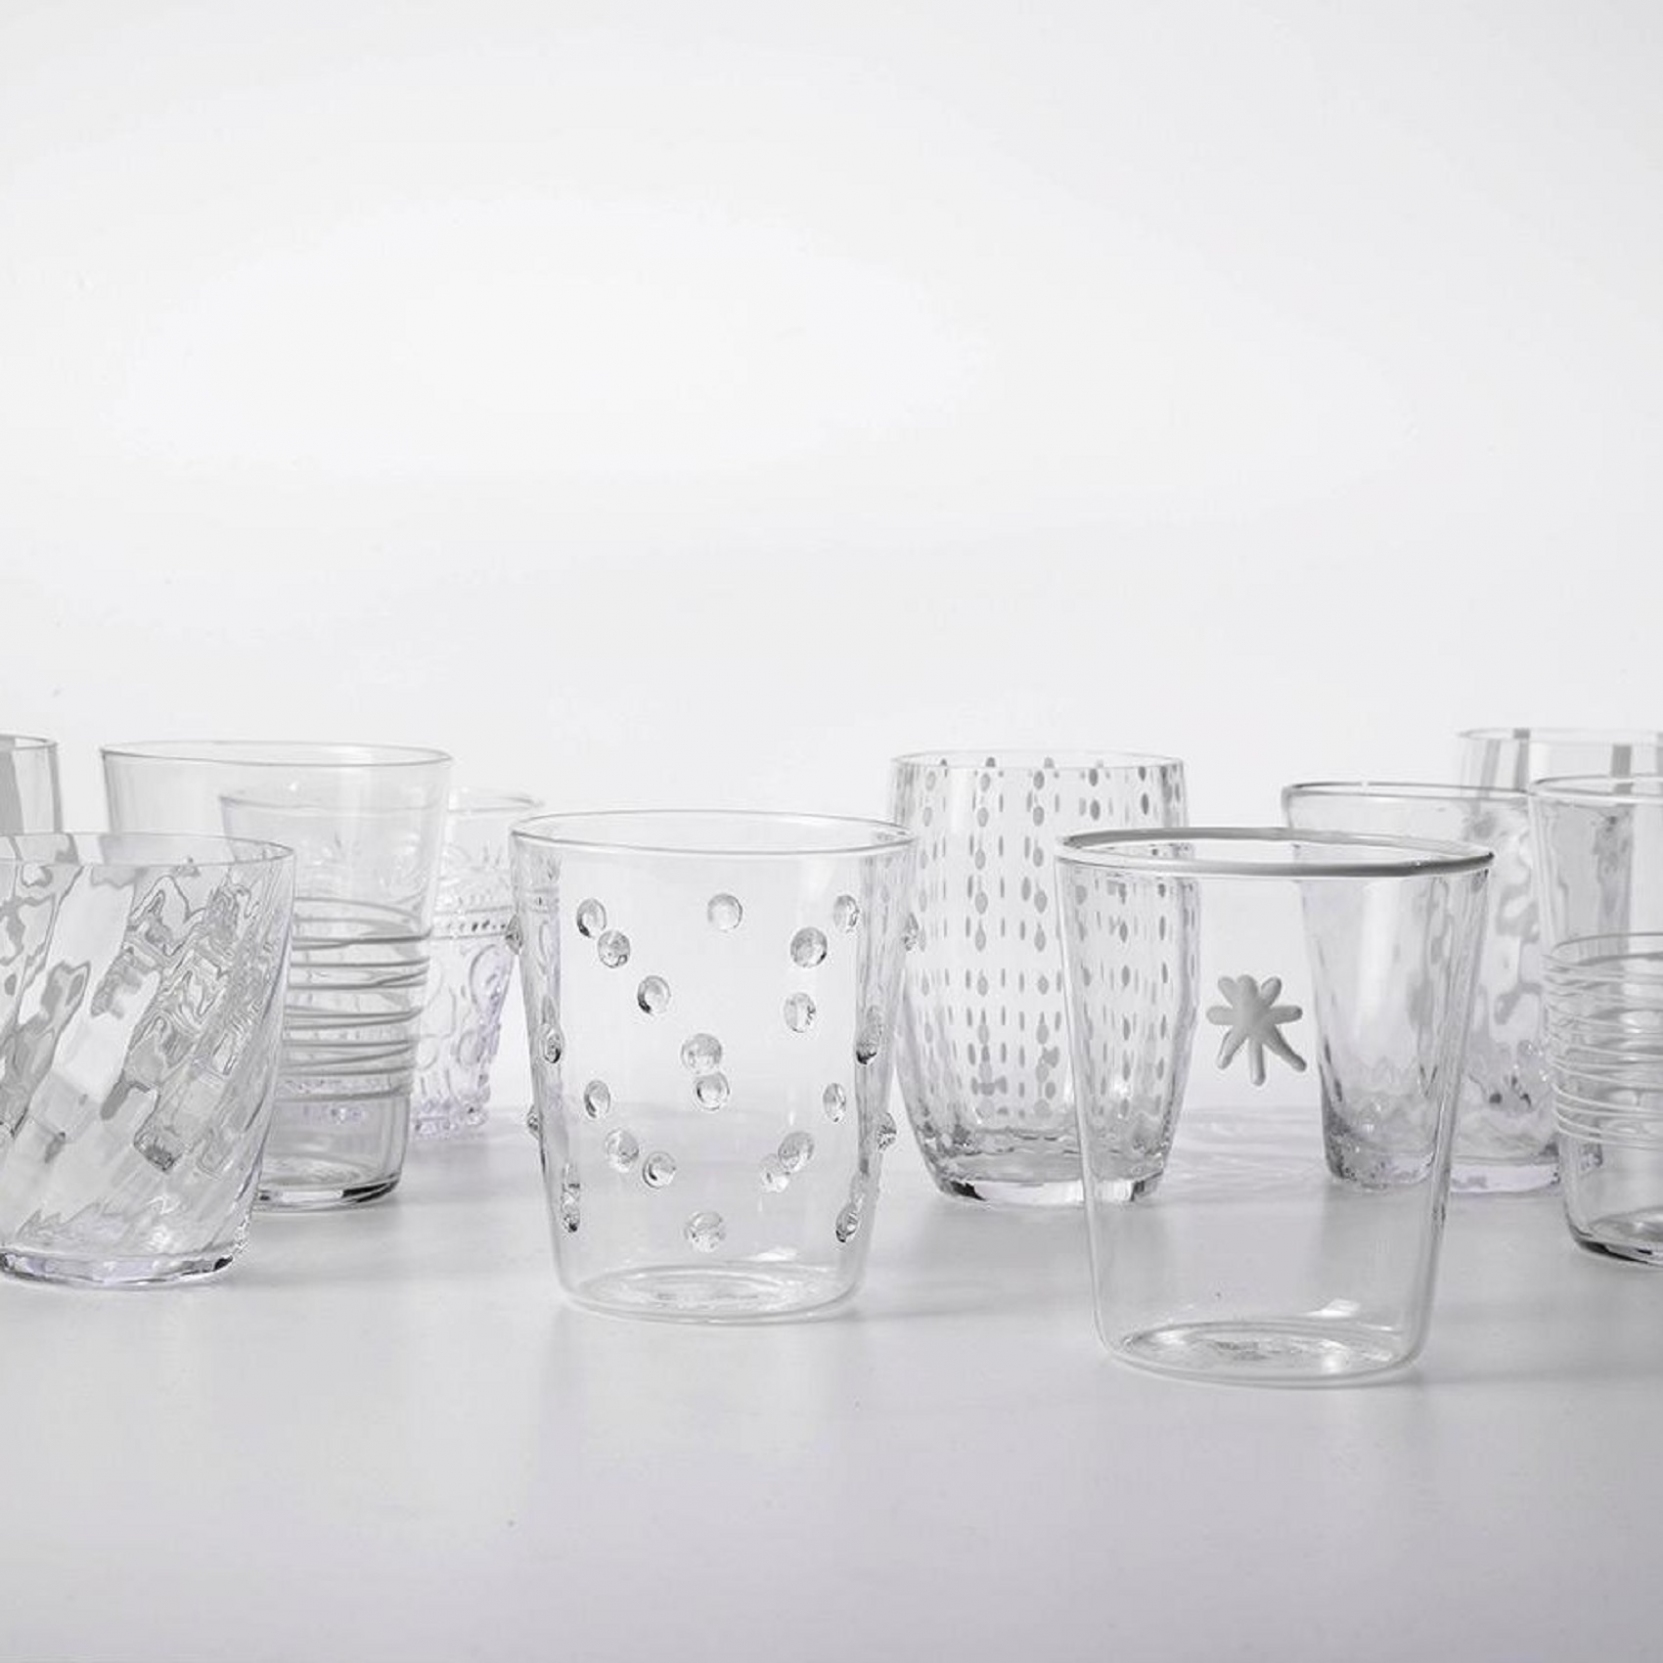 Bicchiere vetro Melting Pot monocolore trasparente set 6 pezzi di